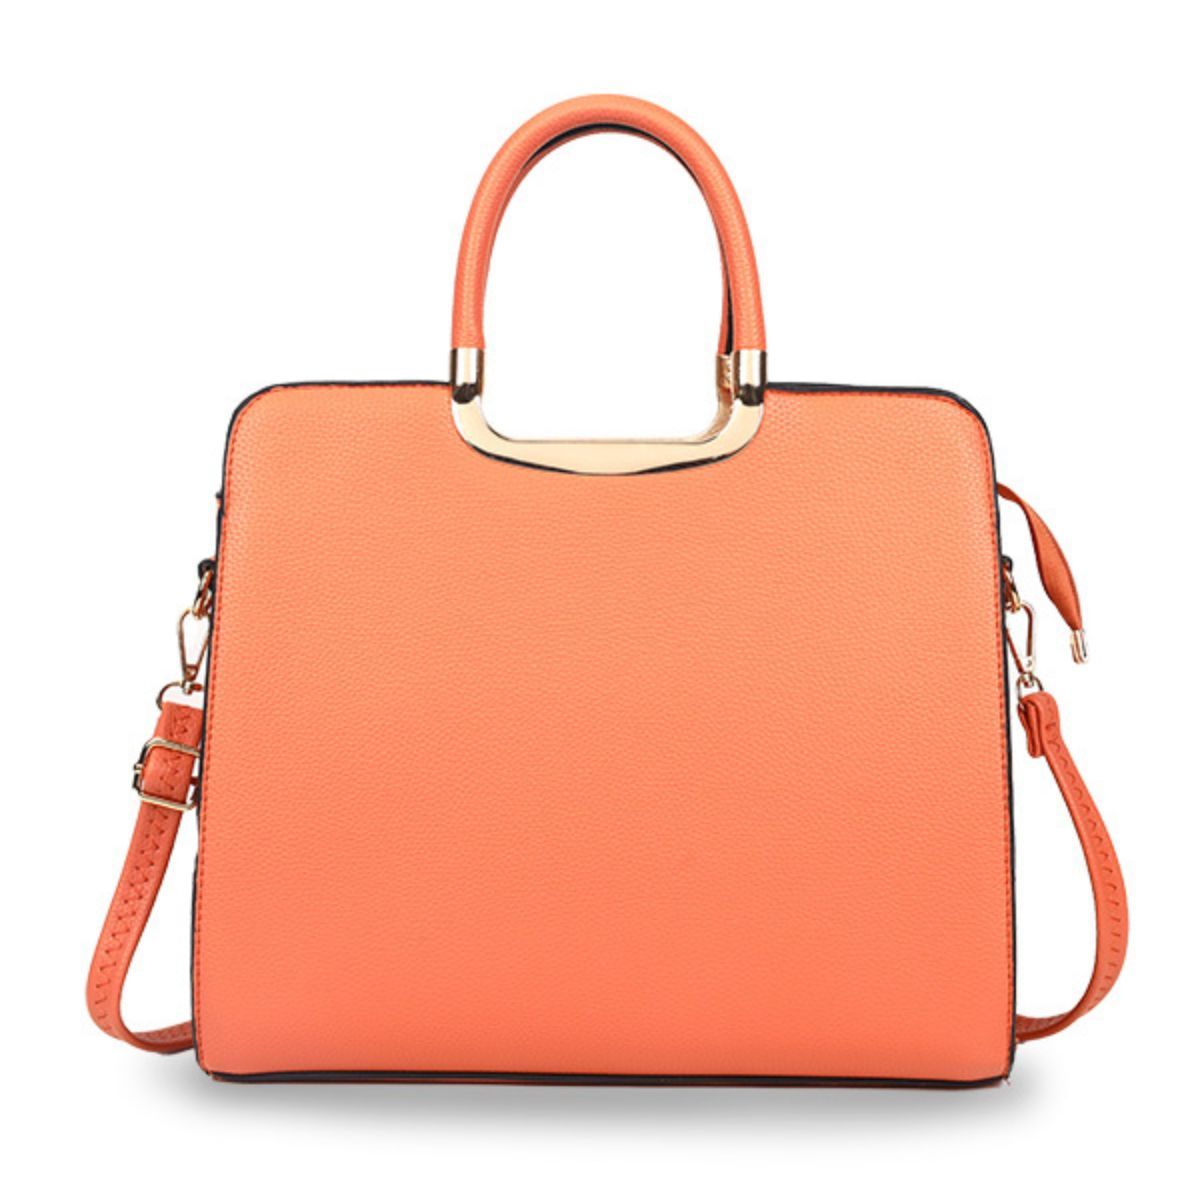 Purse Orange Satchel Handbag for Women